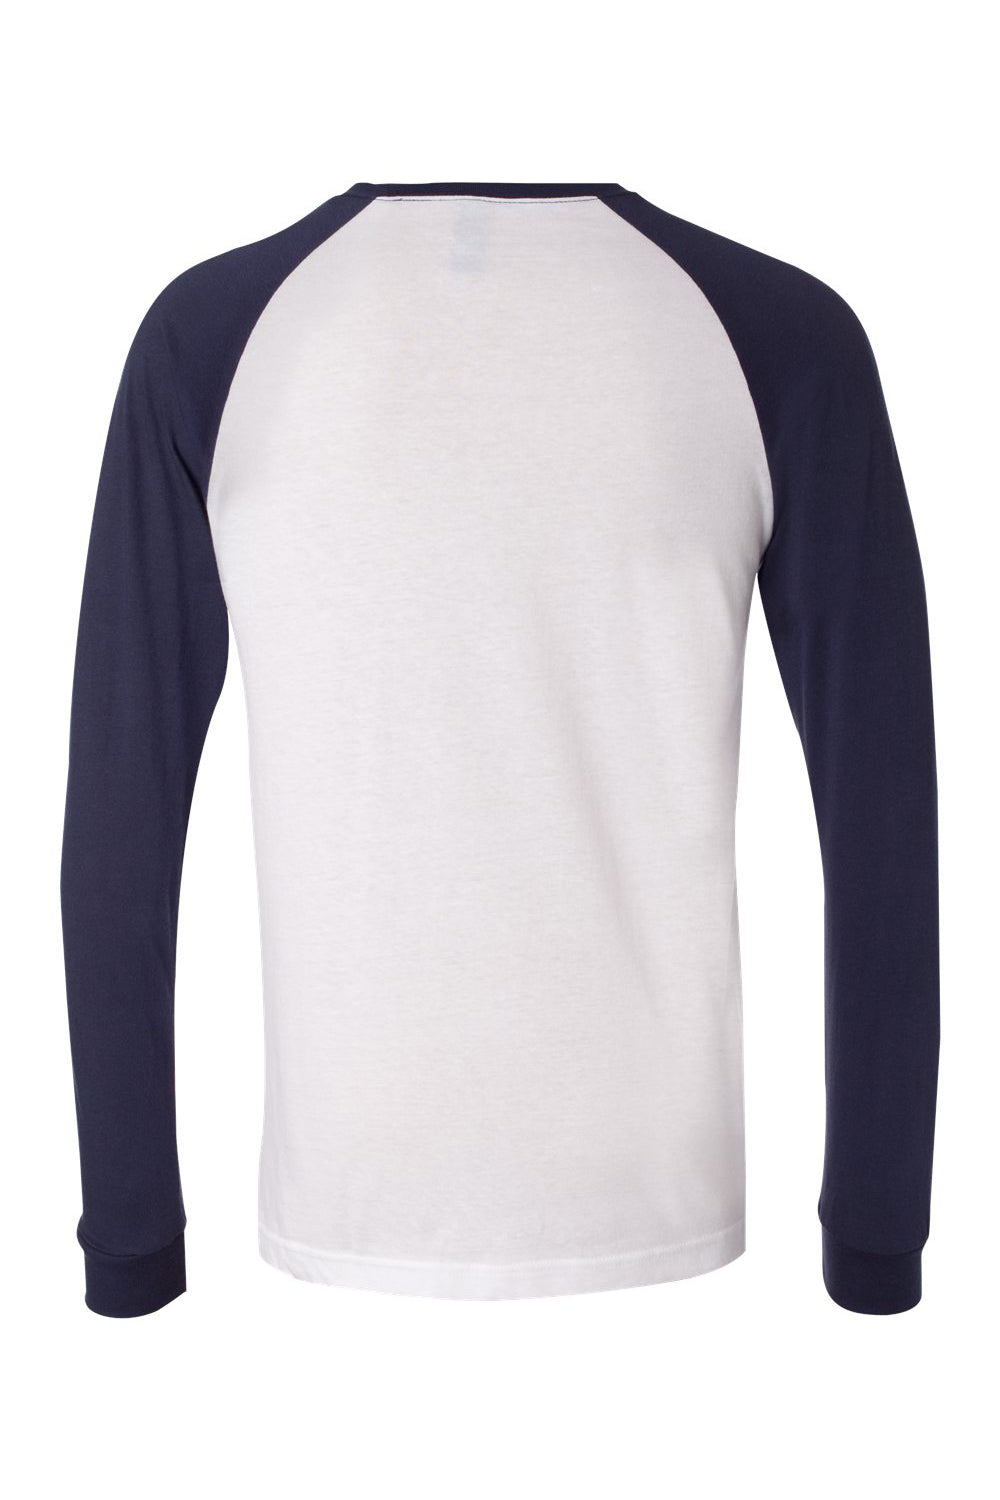 Bella + Canvas 3000C/3000 Mens Jersey Long Sleeve Crewneck T-Shirt White/Navy Blue Flat Back